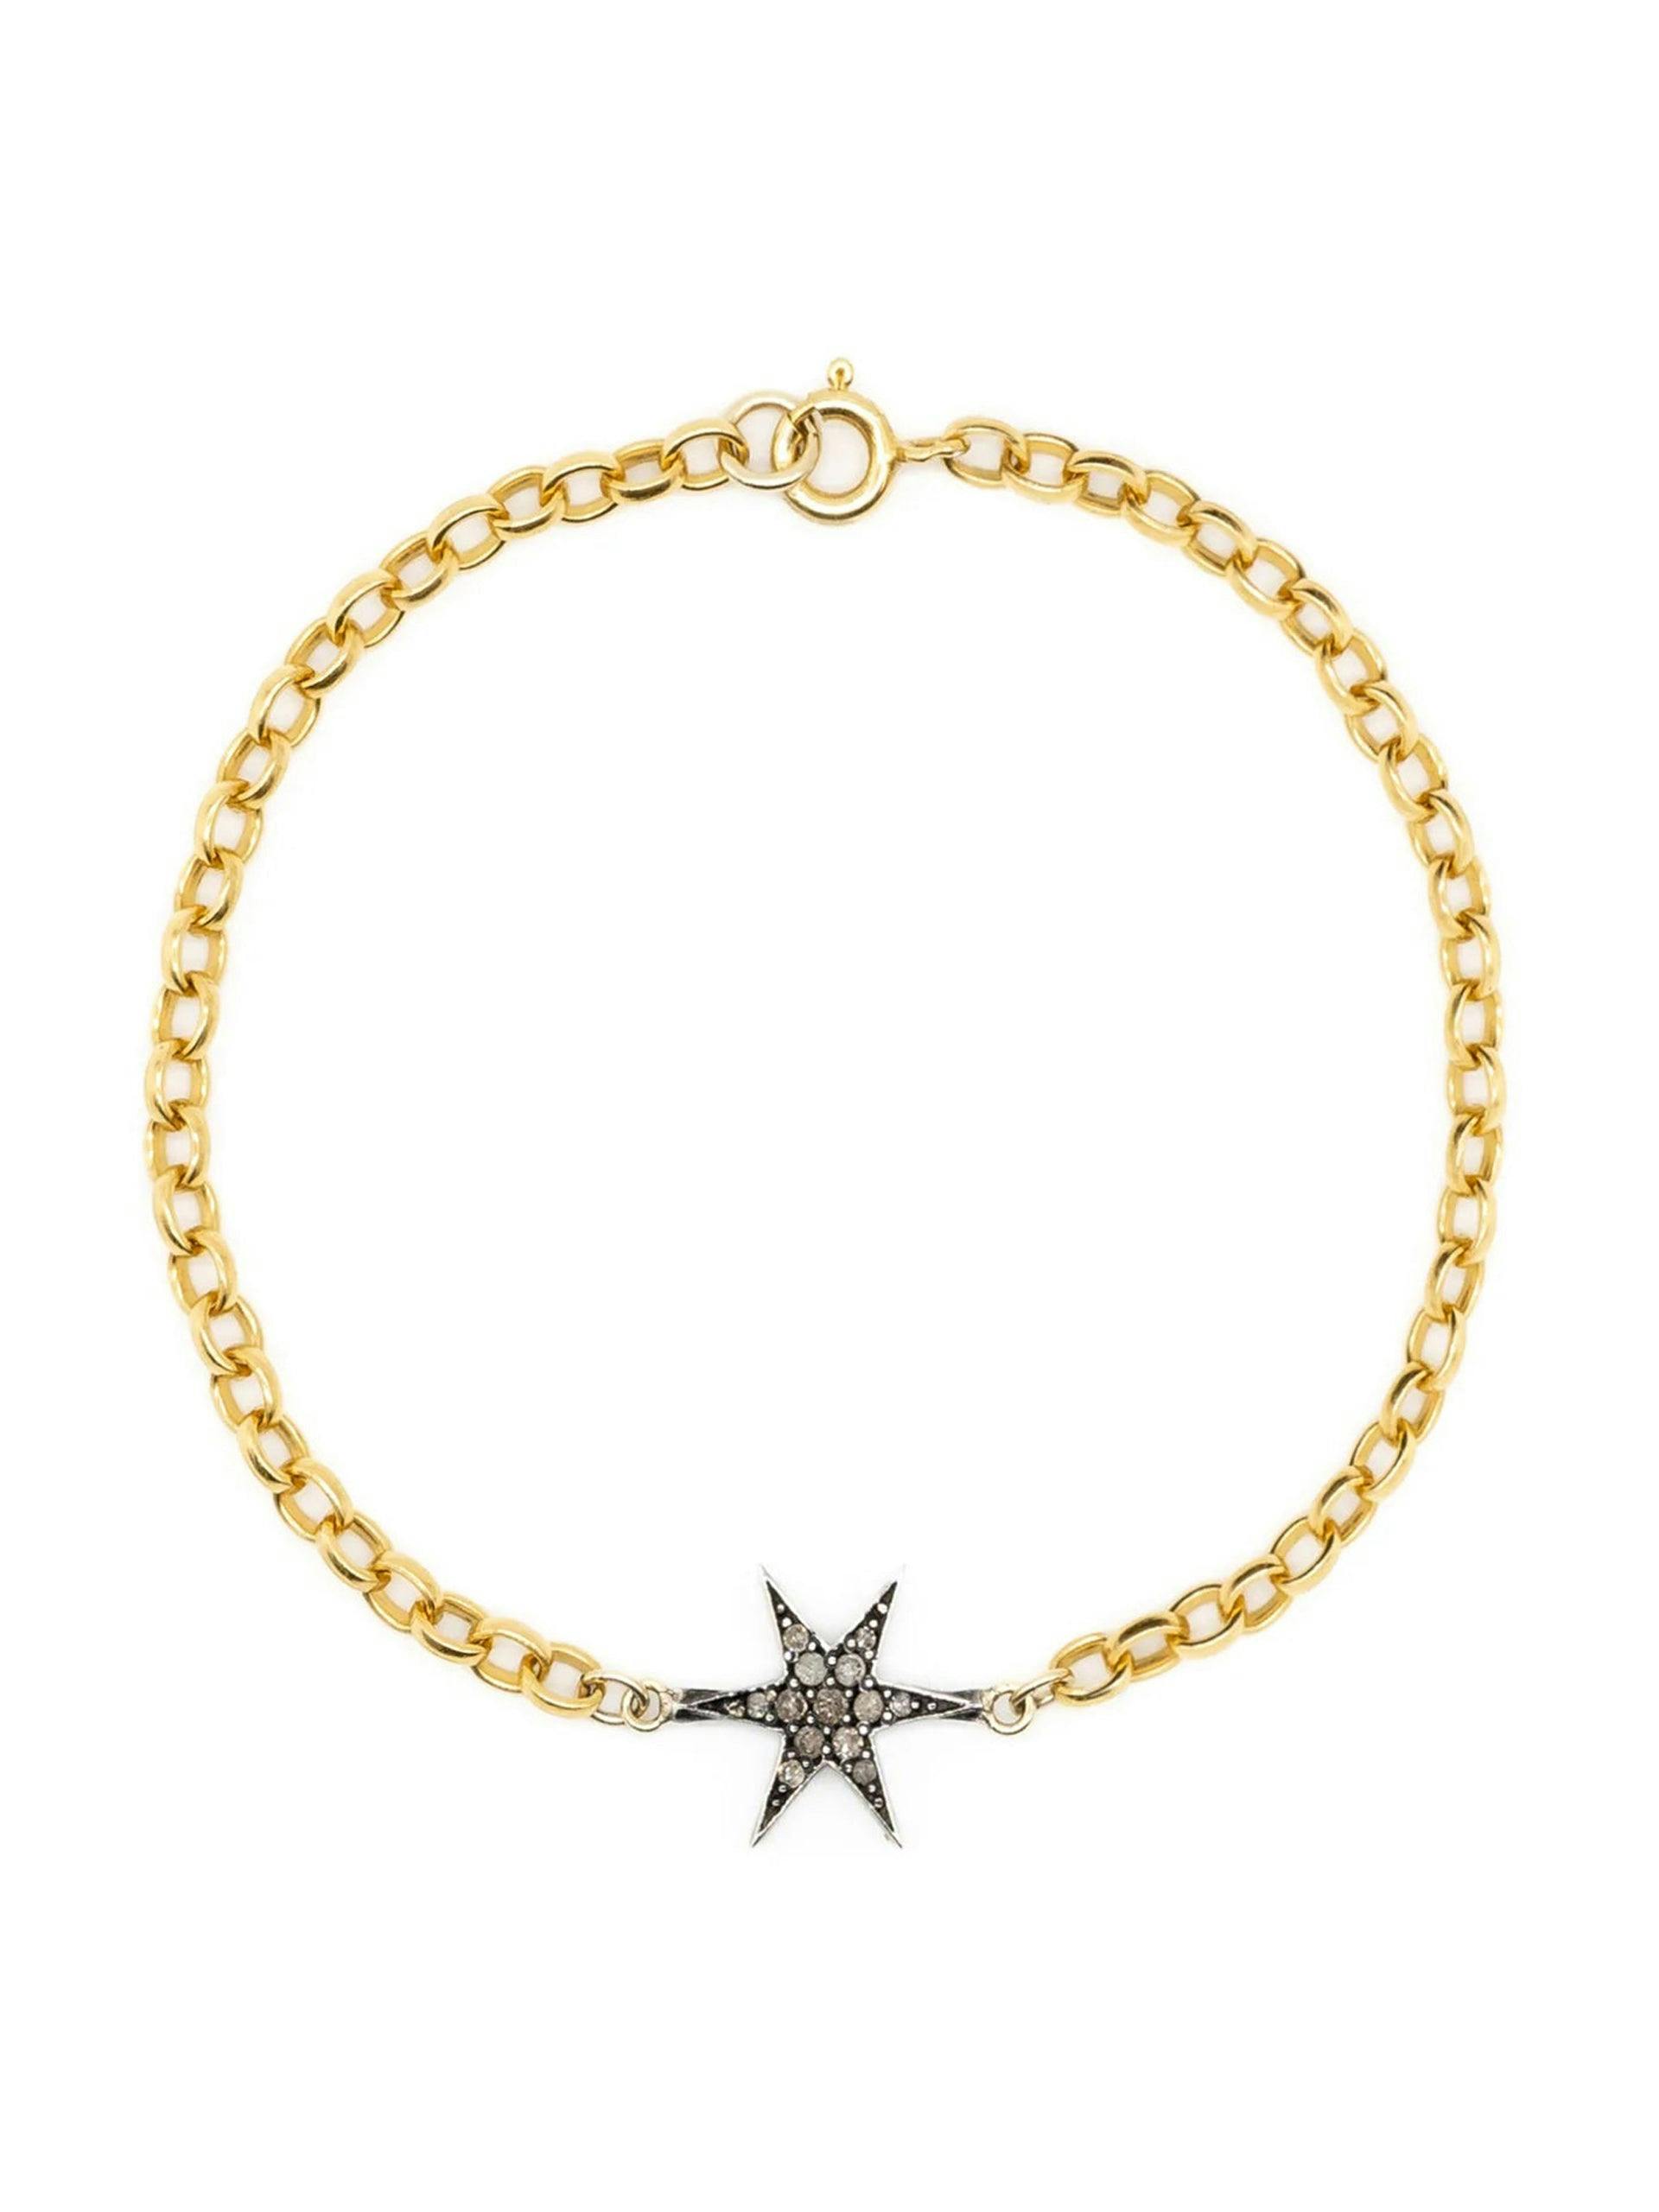 Cosmic star diamond bracelet